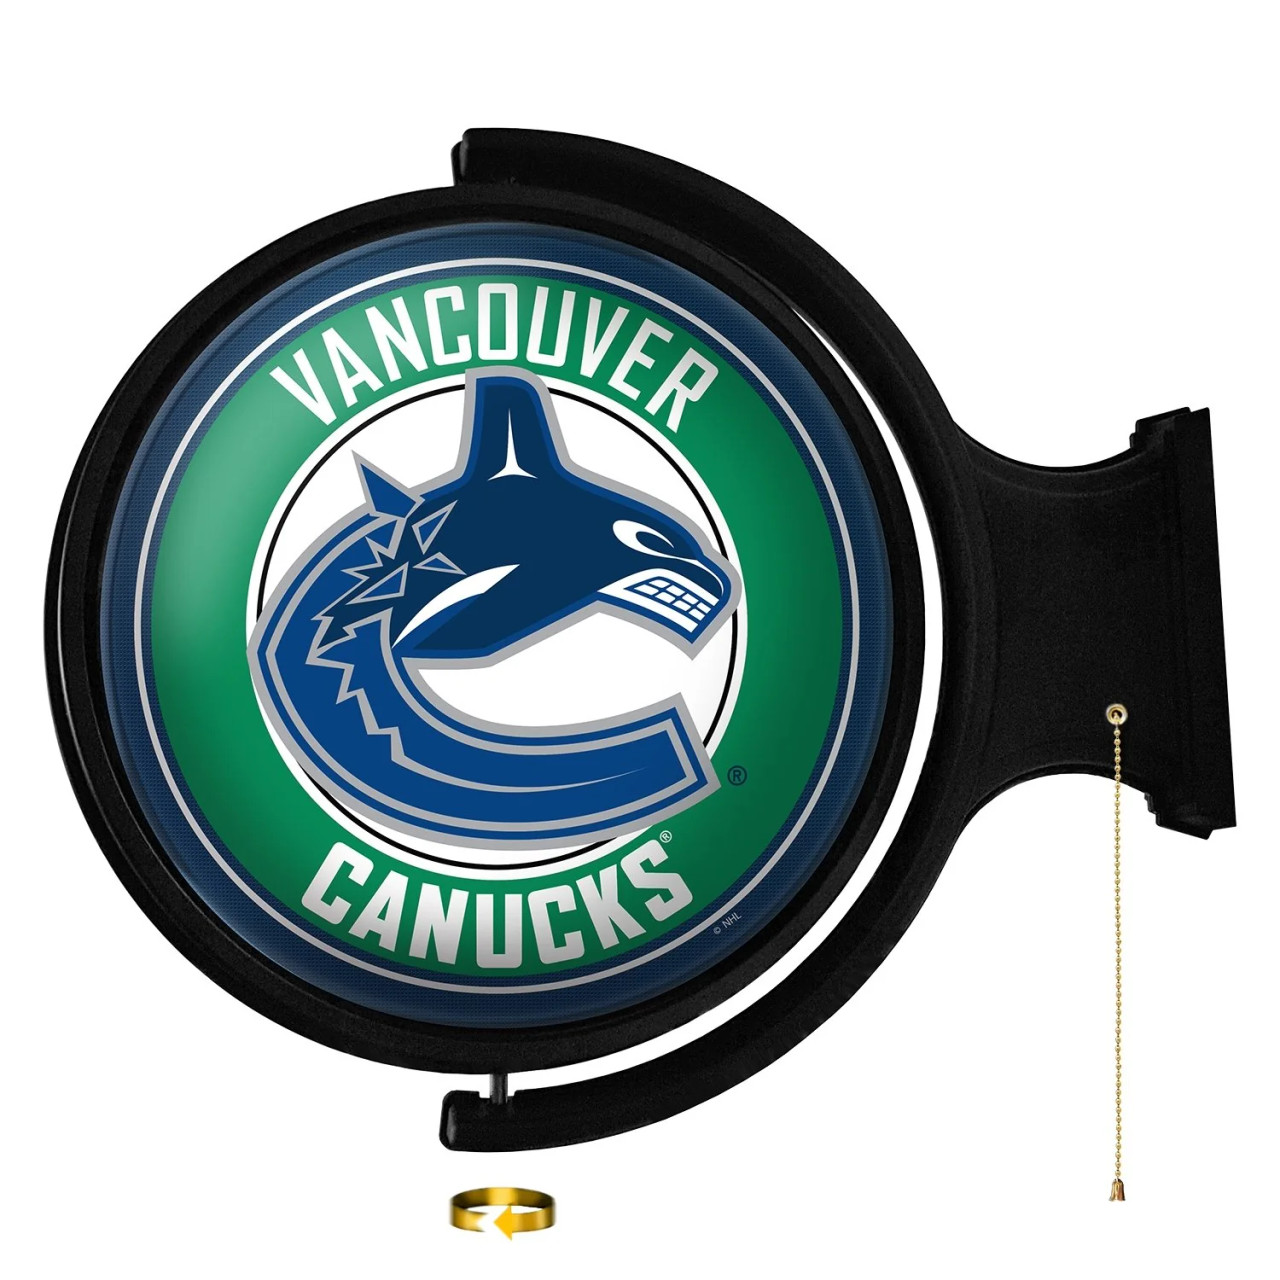 NHVANC-115-01, Vancouver, Van, Canucks, Original, Round, Rotating, Lighted, Wall, Sign, NHVANC-115-01, NHL, The Fan-Brand, 686082113779